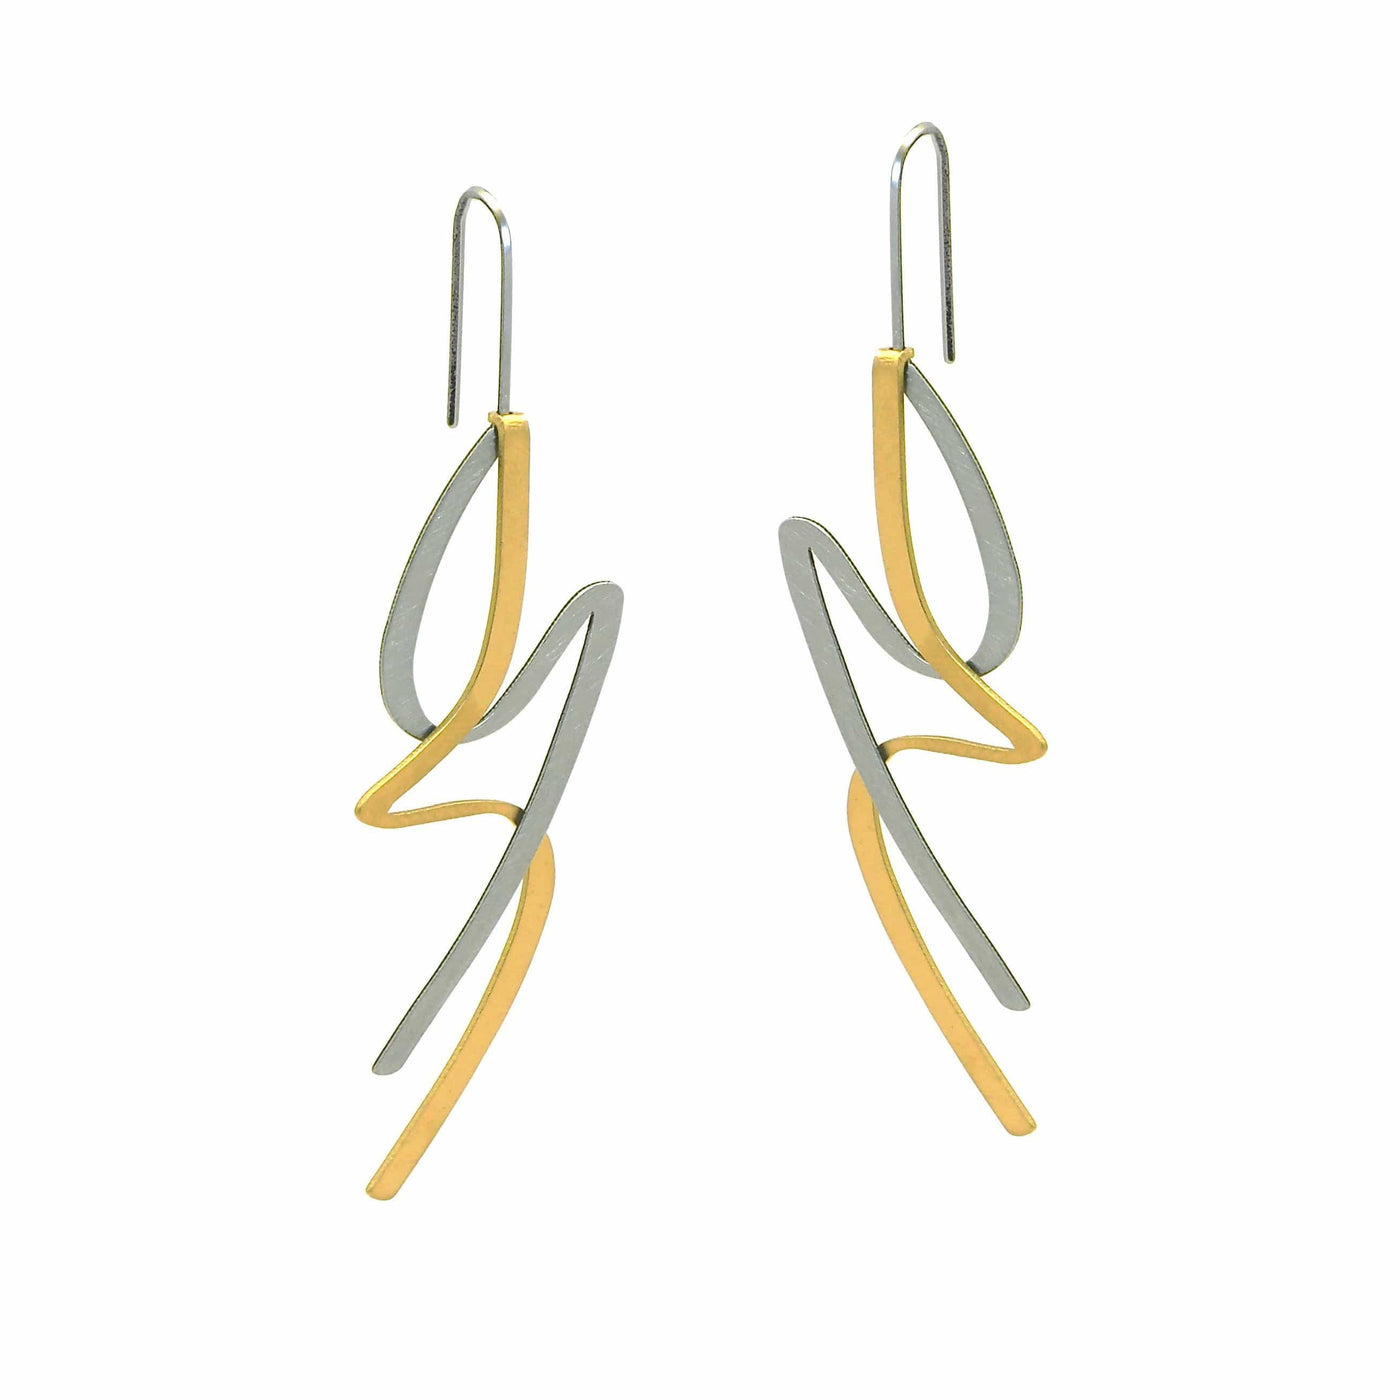 X2 Lithe Earrings - Raw/ Gold - inSync design